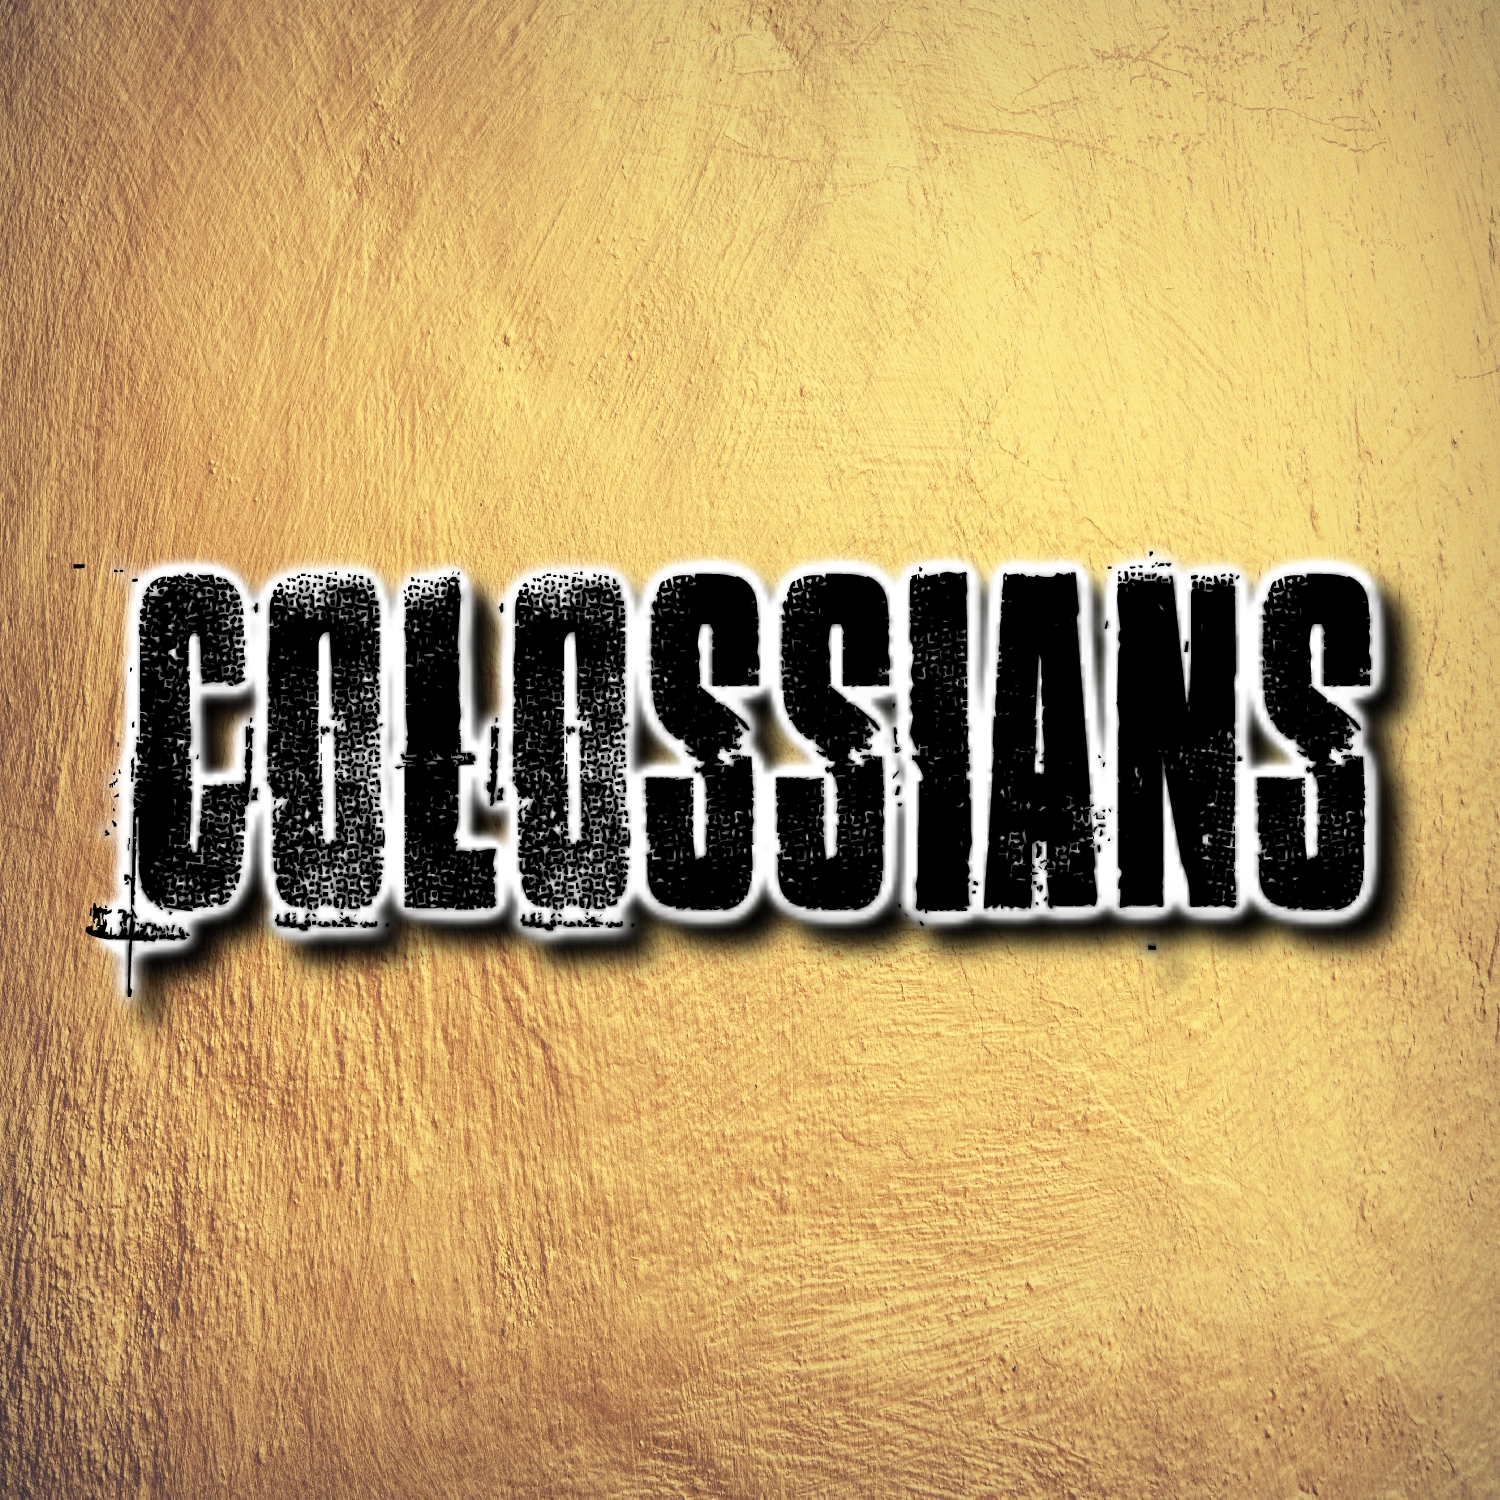 colossians.jpg